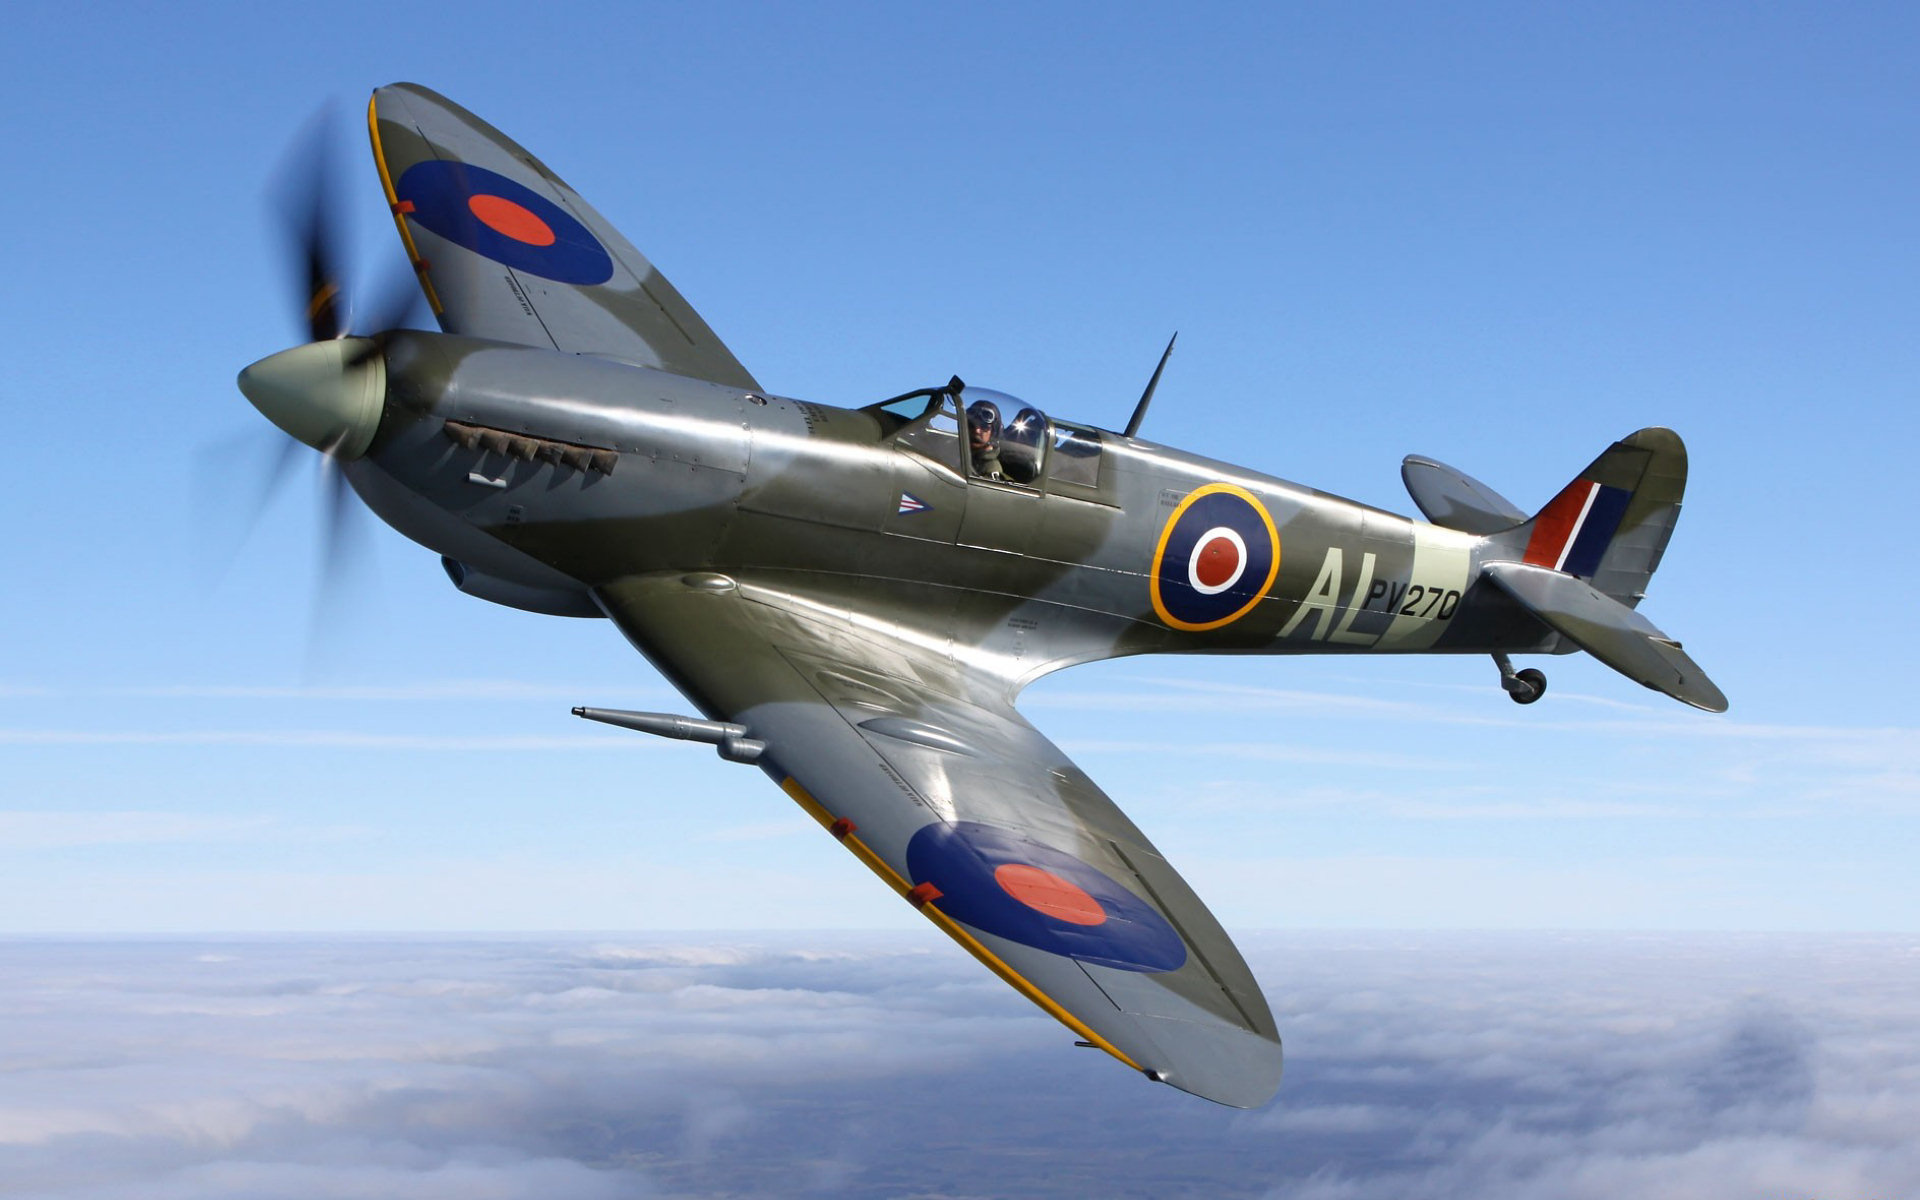 Spitfire wallpaper HD, Aviation beauty, Warplane elegance, High-quality pictures, 1920x1200 HD Desktop